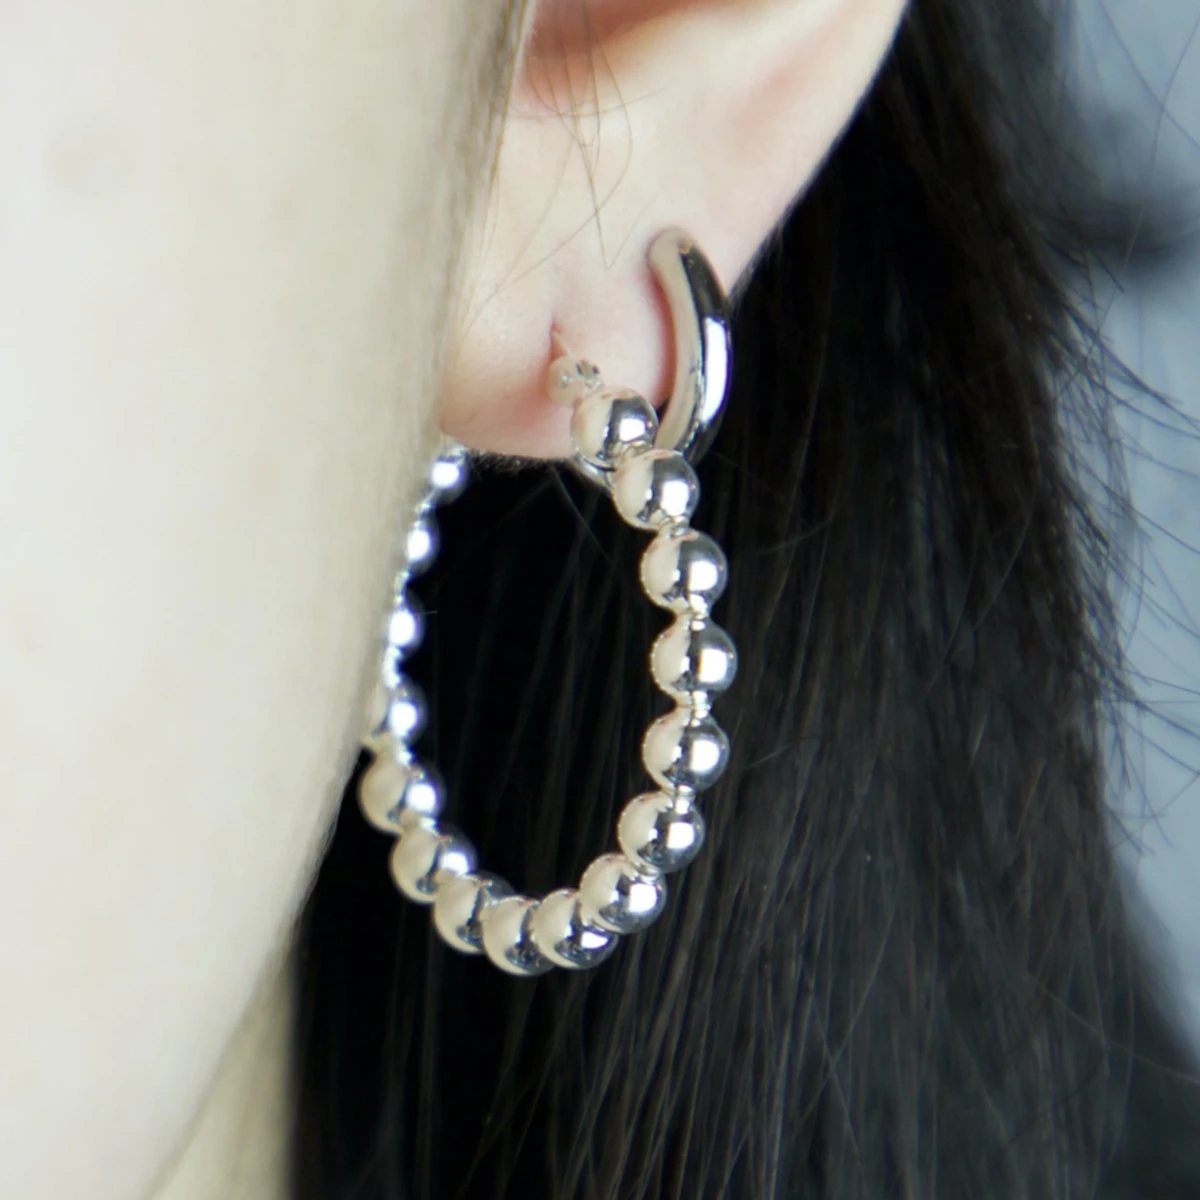 Pearl Drop Earrings For Girls and Women